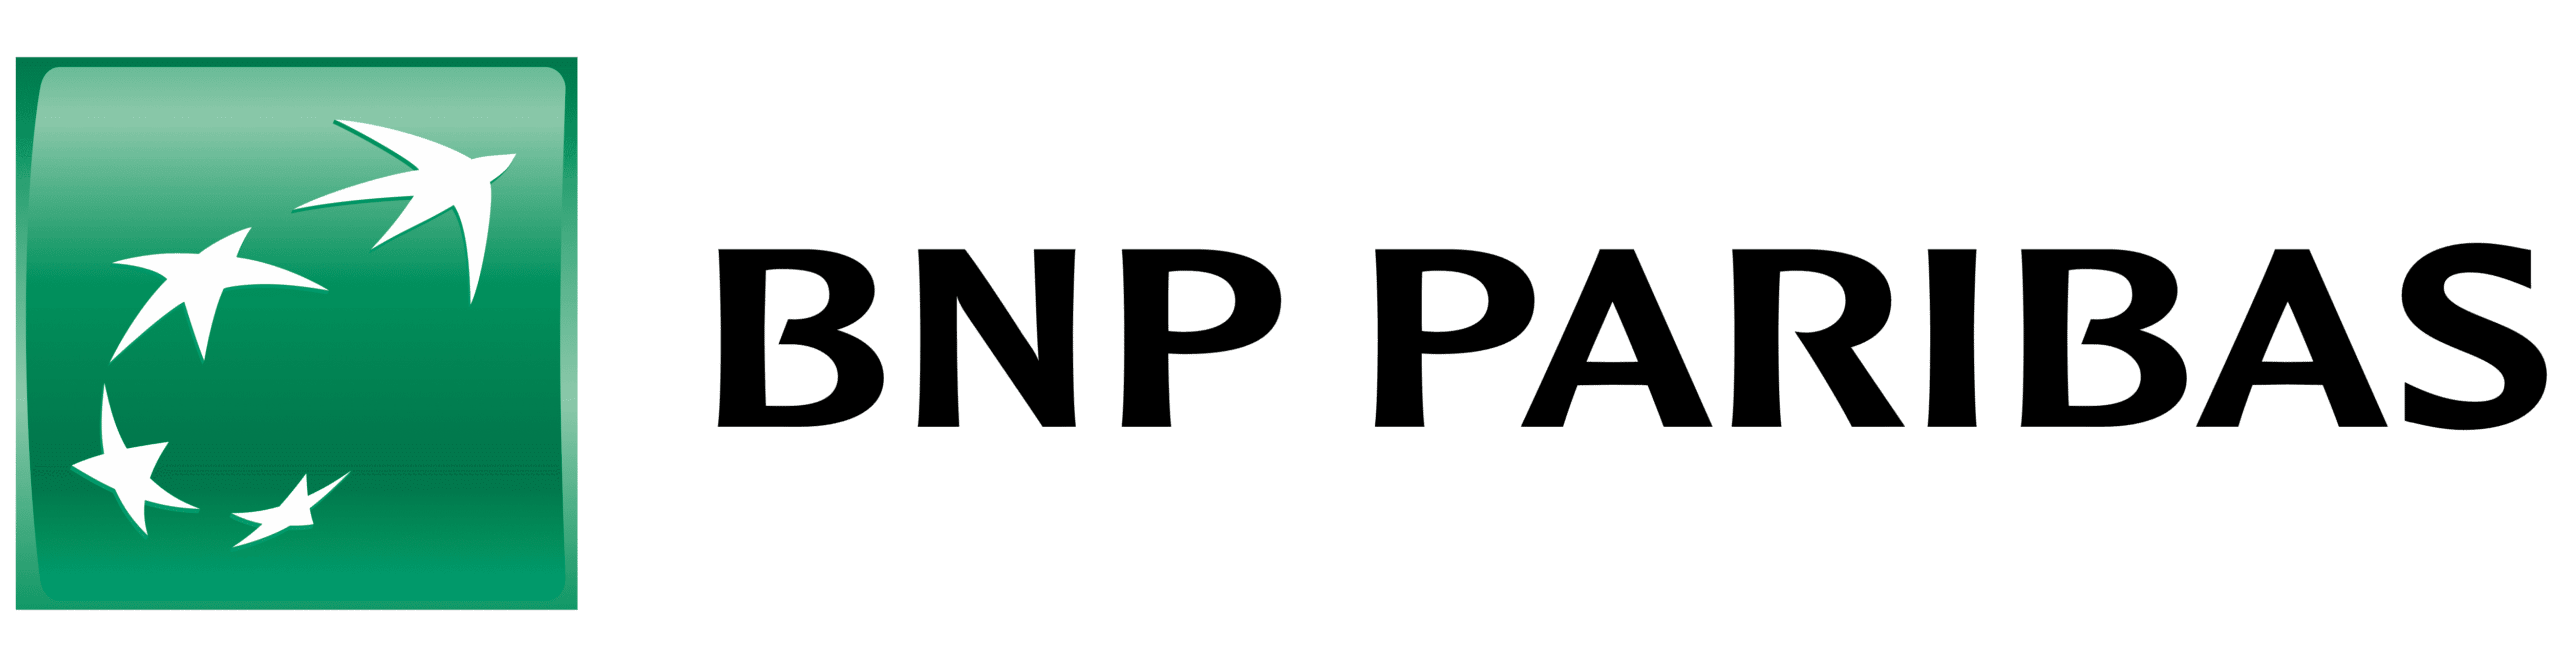 BNP Paribas – Clé digitale